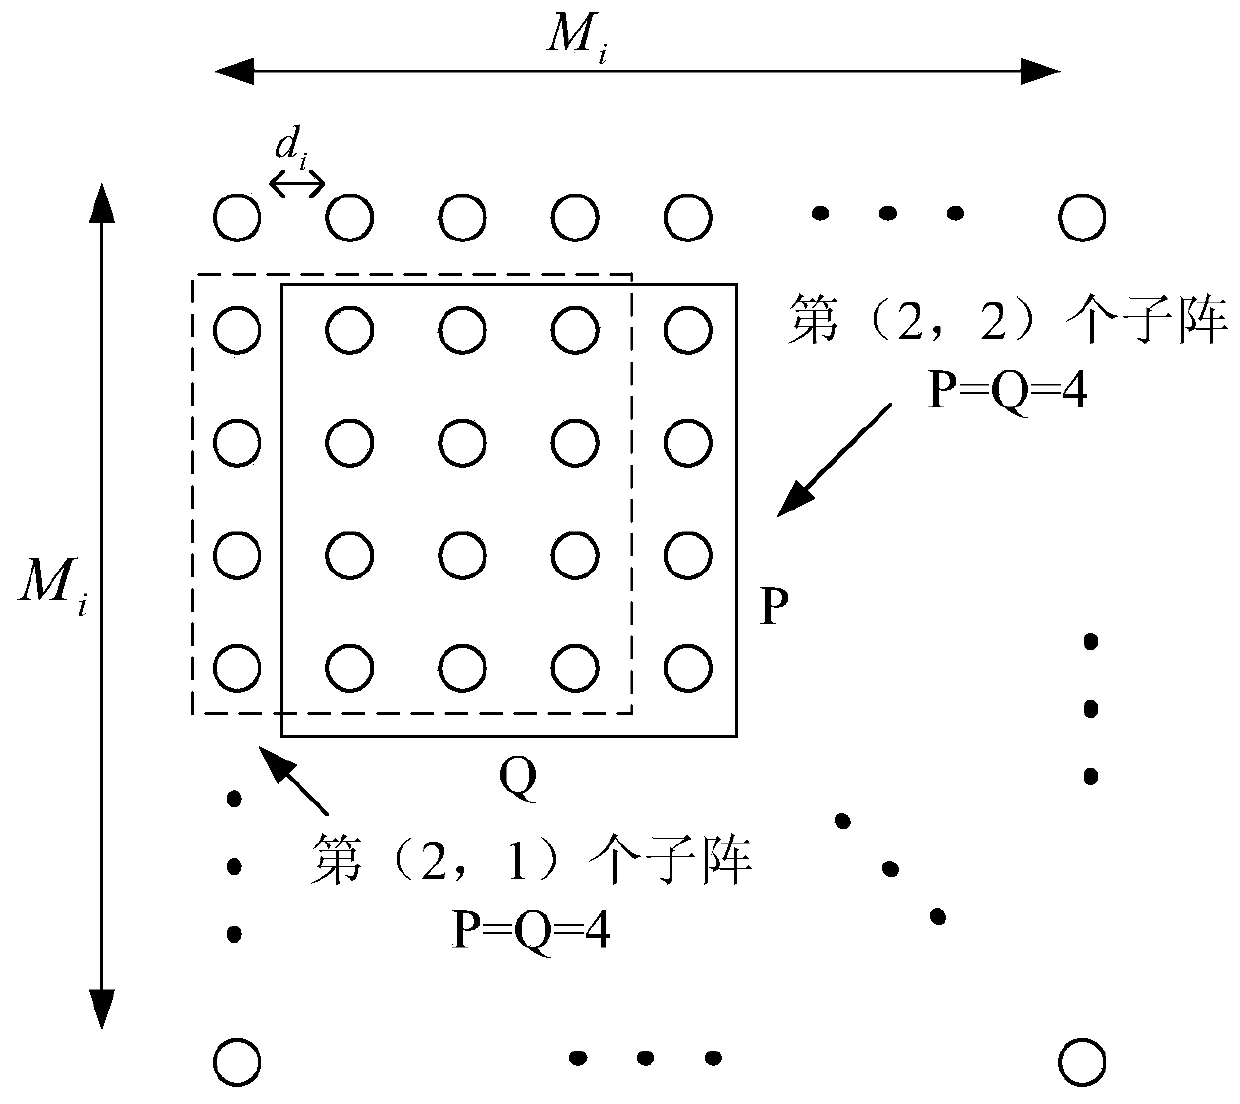 Method for coherent signal source DOA estimation under co-prime area array